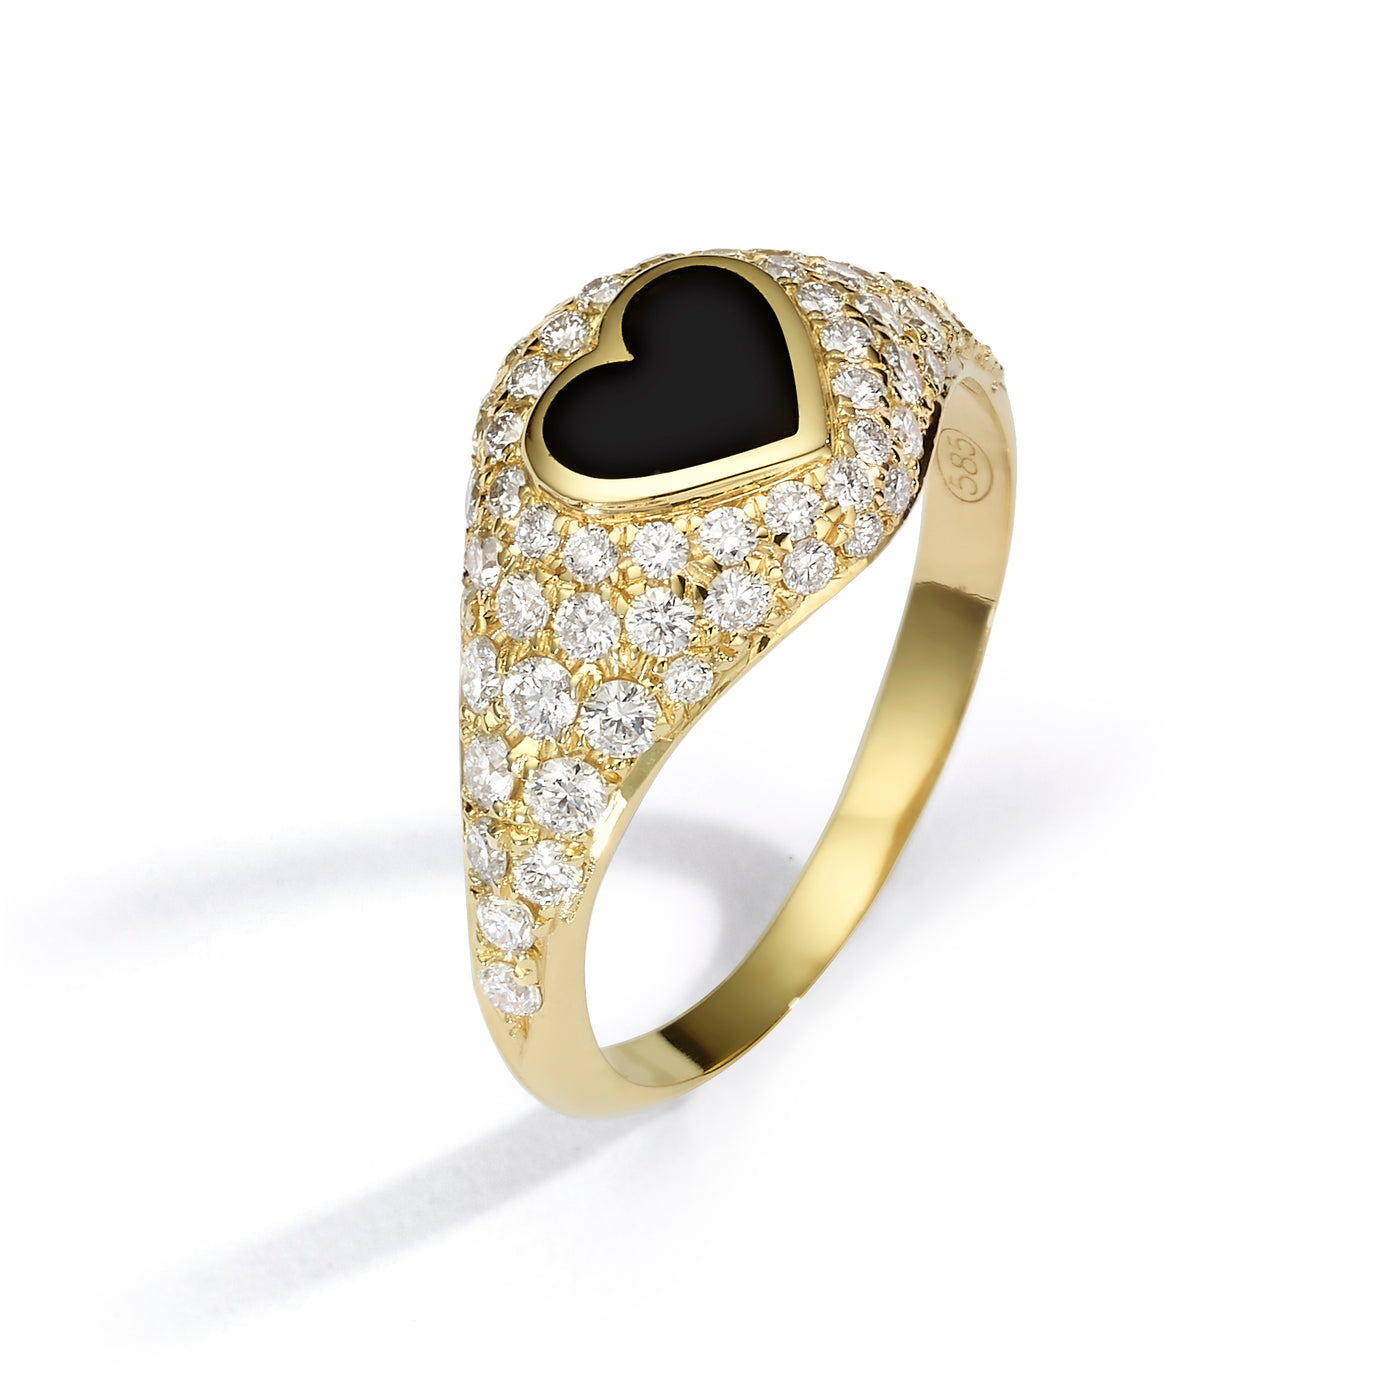 Heart Pinky Ring diamonds- black